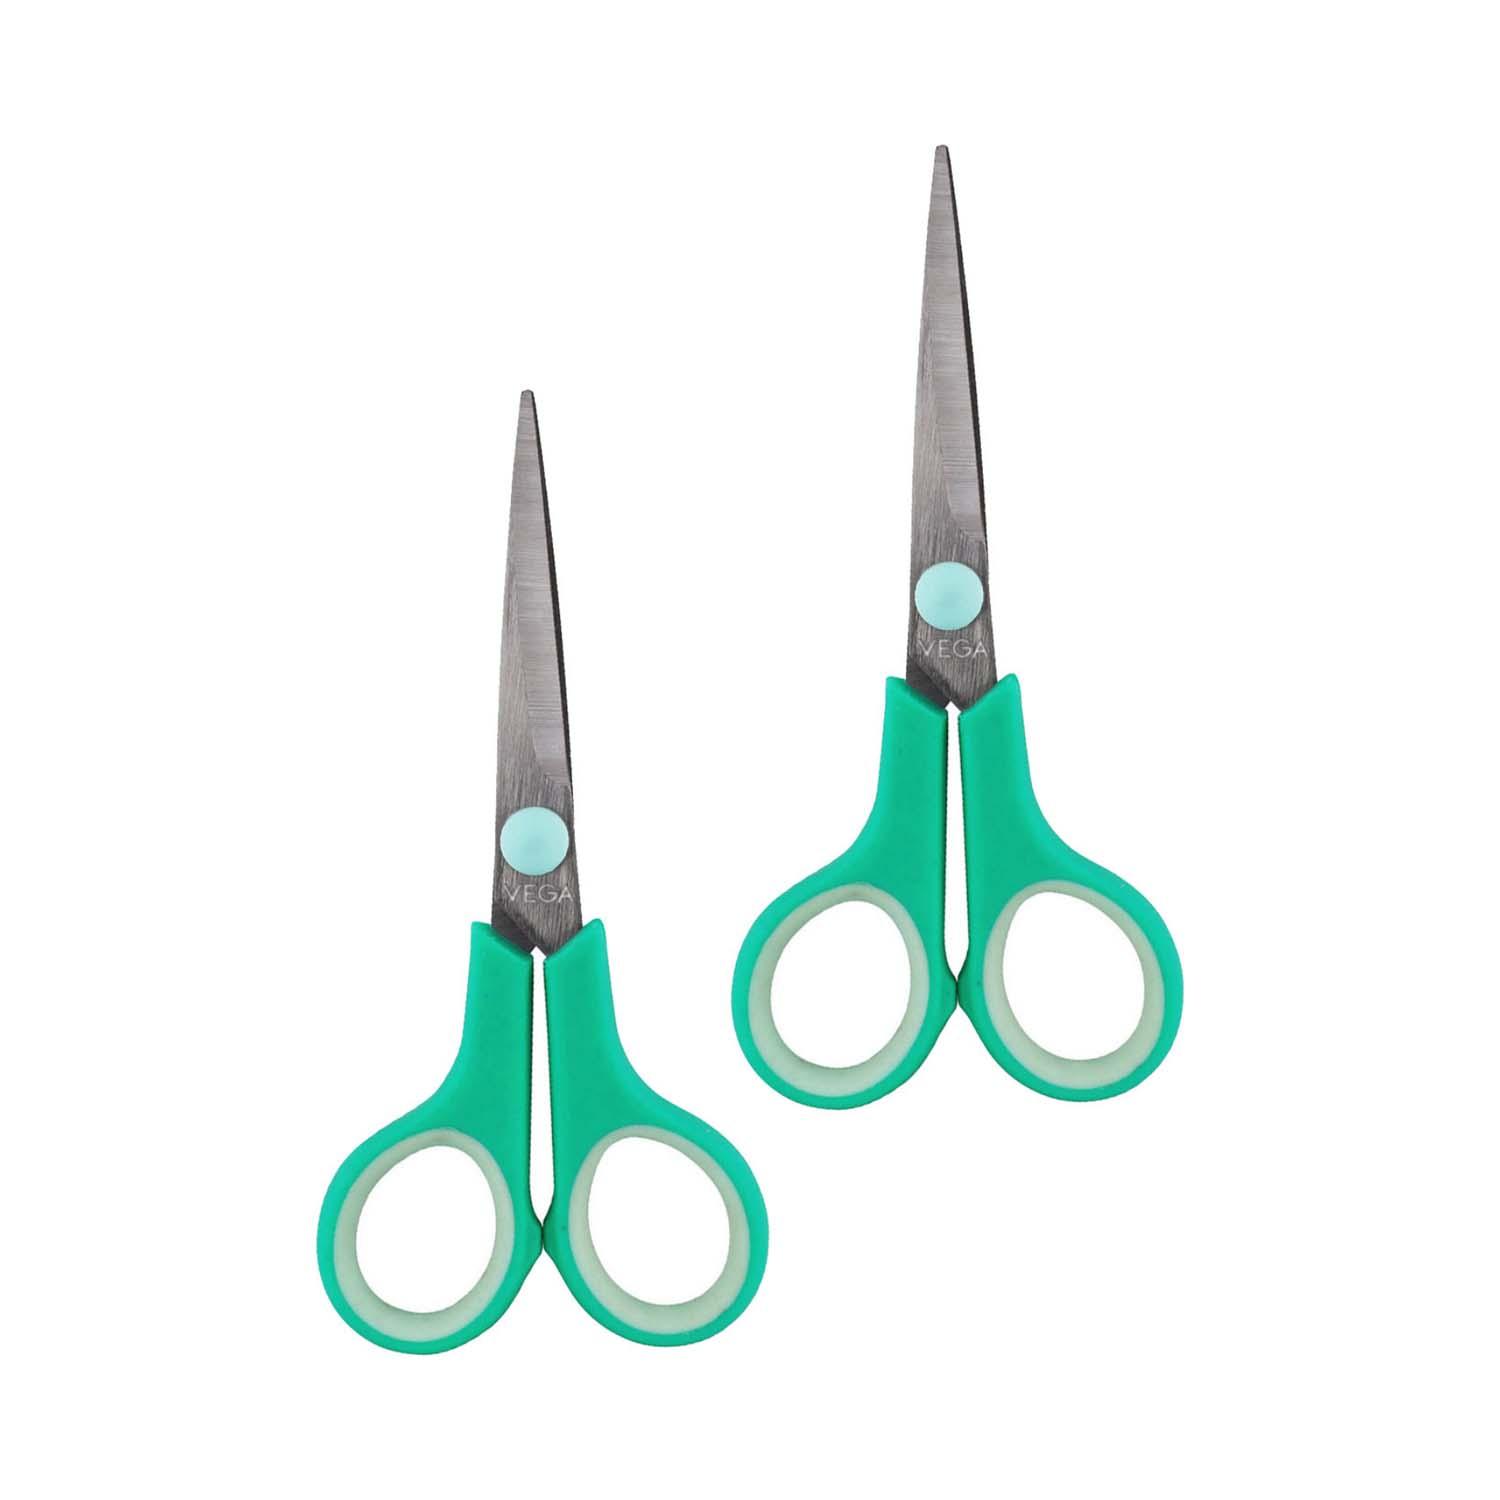 Vega | Vega Compact Scissors, Green (Pack of 2)